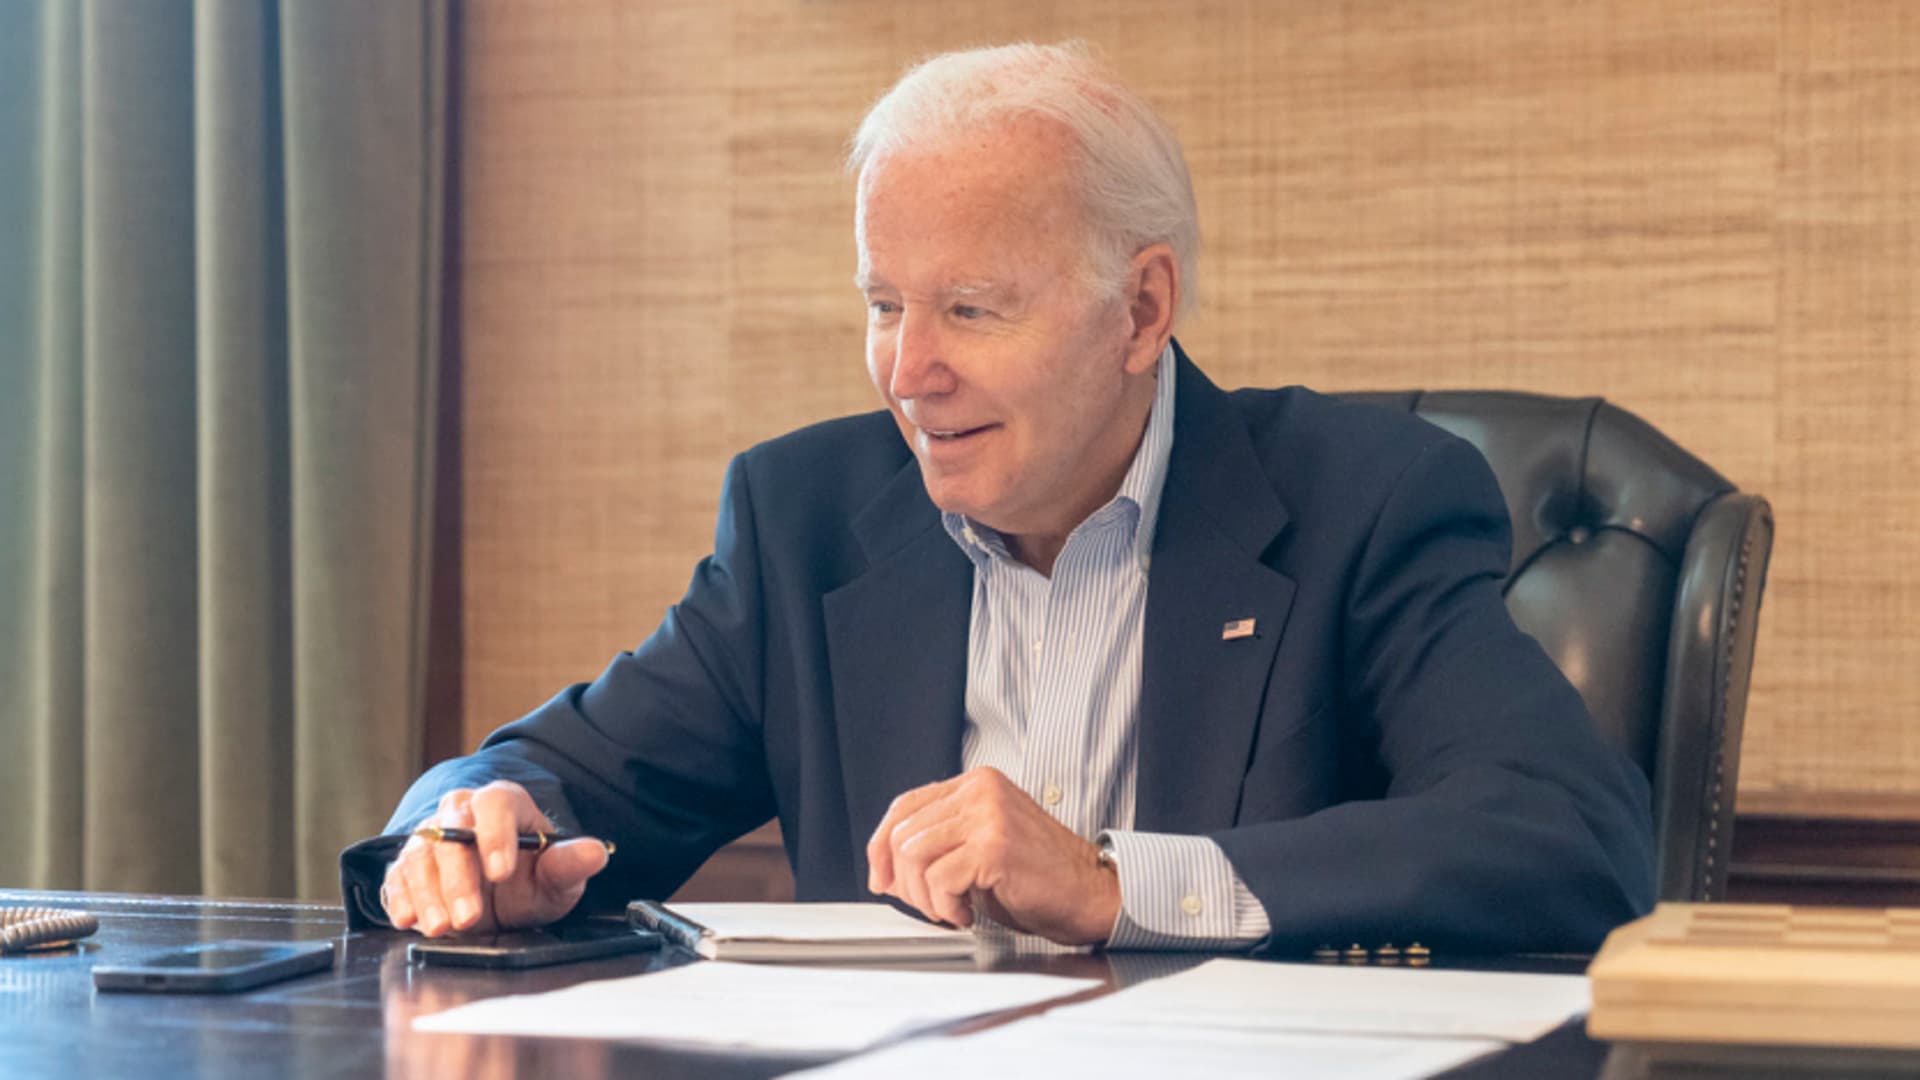 President Biden tests positive for Covid-19, has mild symptoms